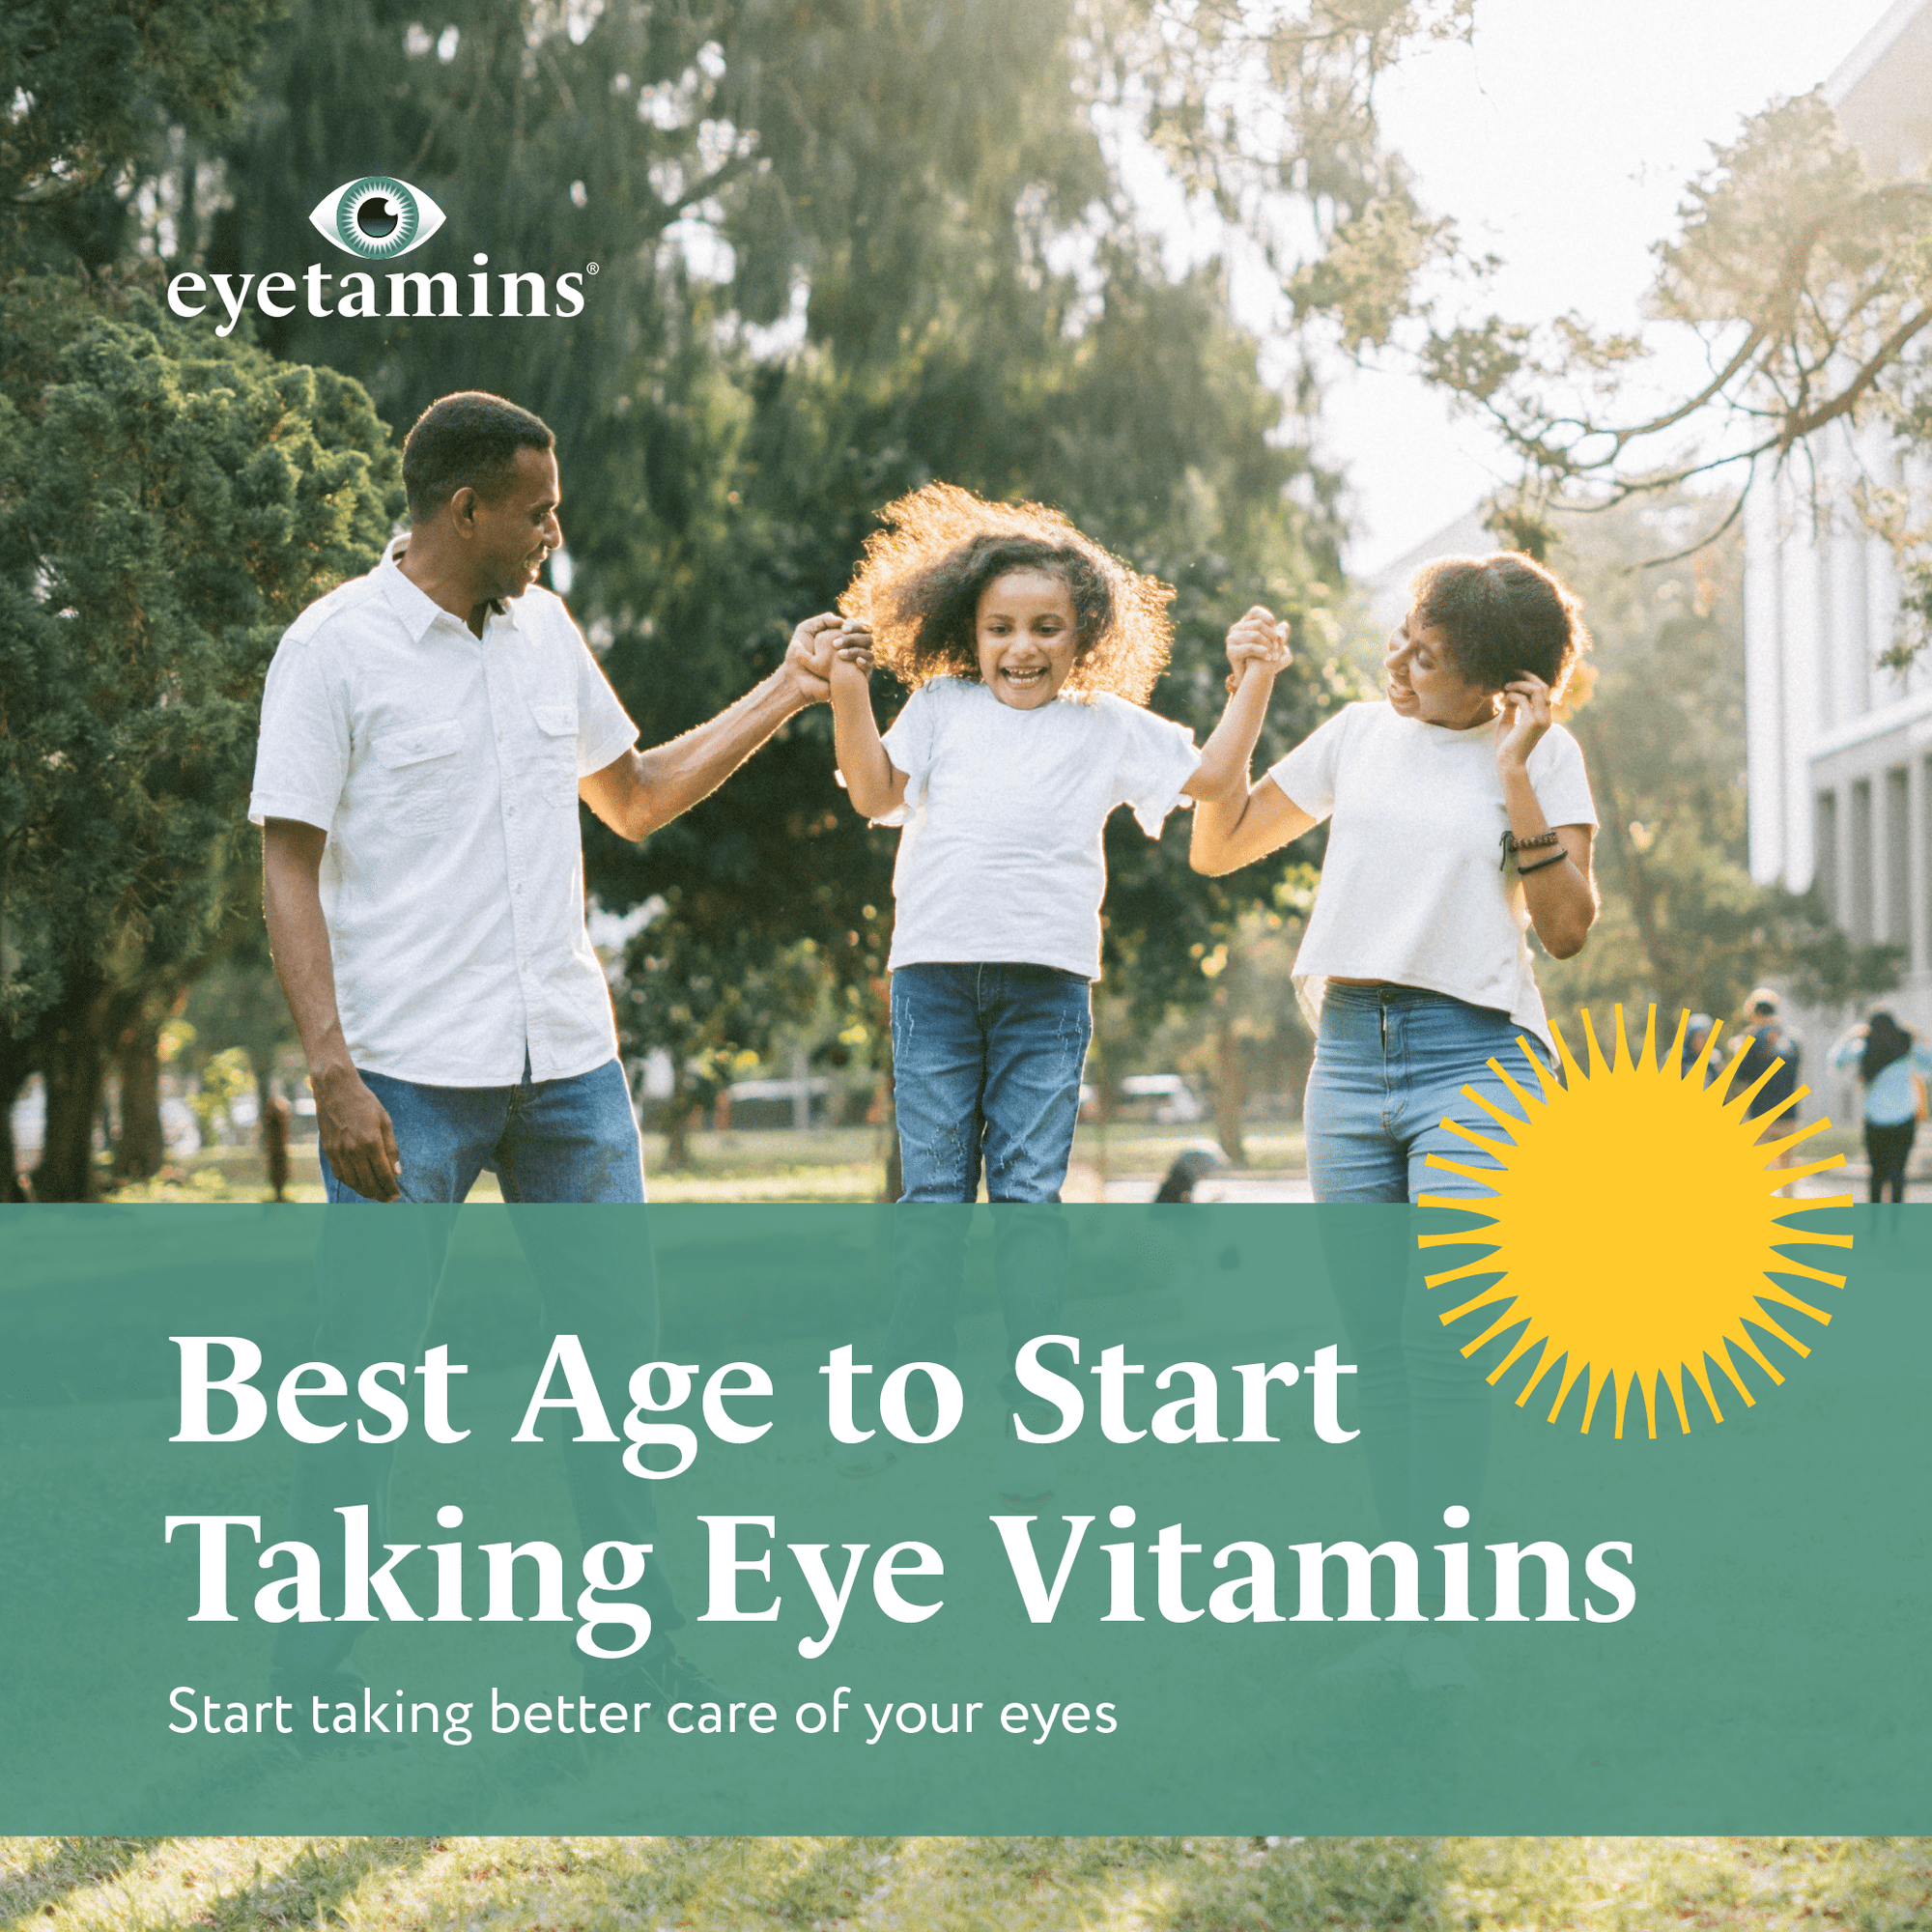 Eyetamins - Best Age to Start Taking Eye Vitamins